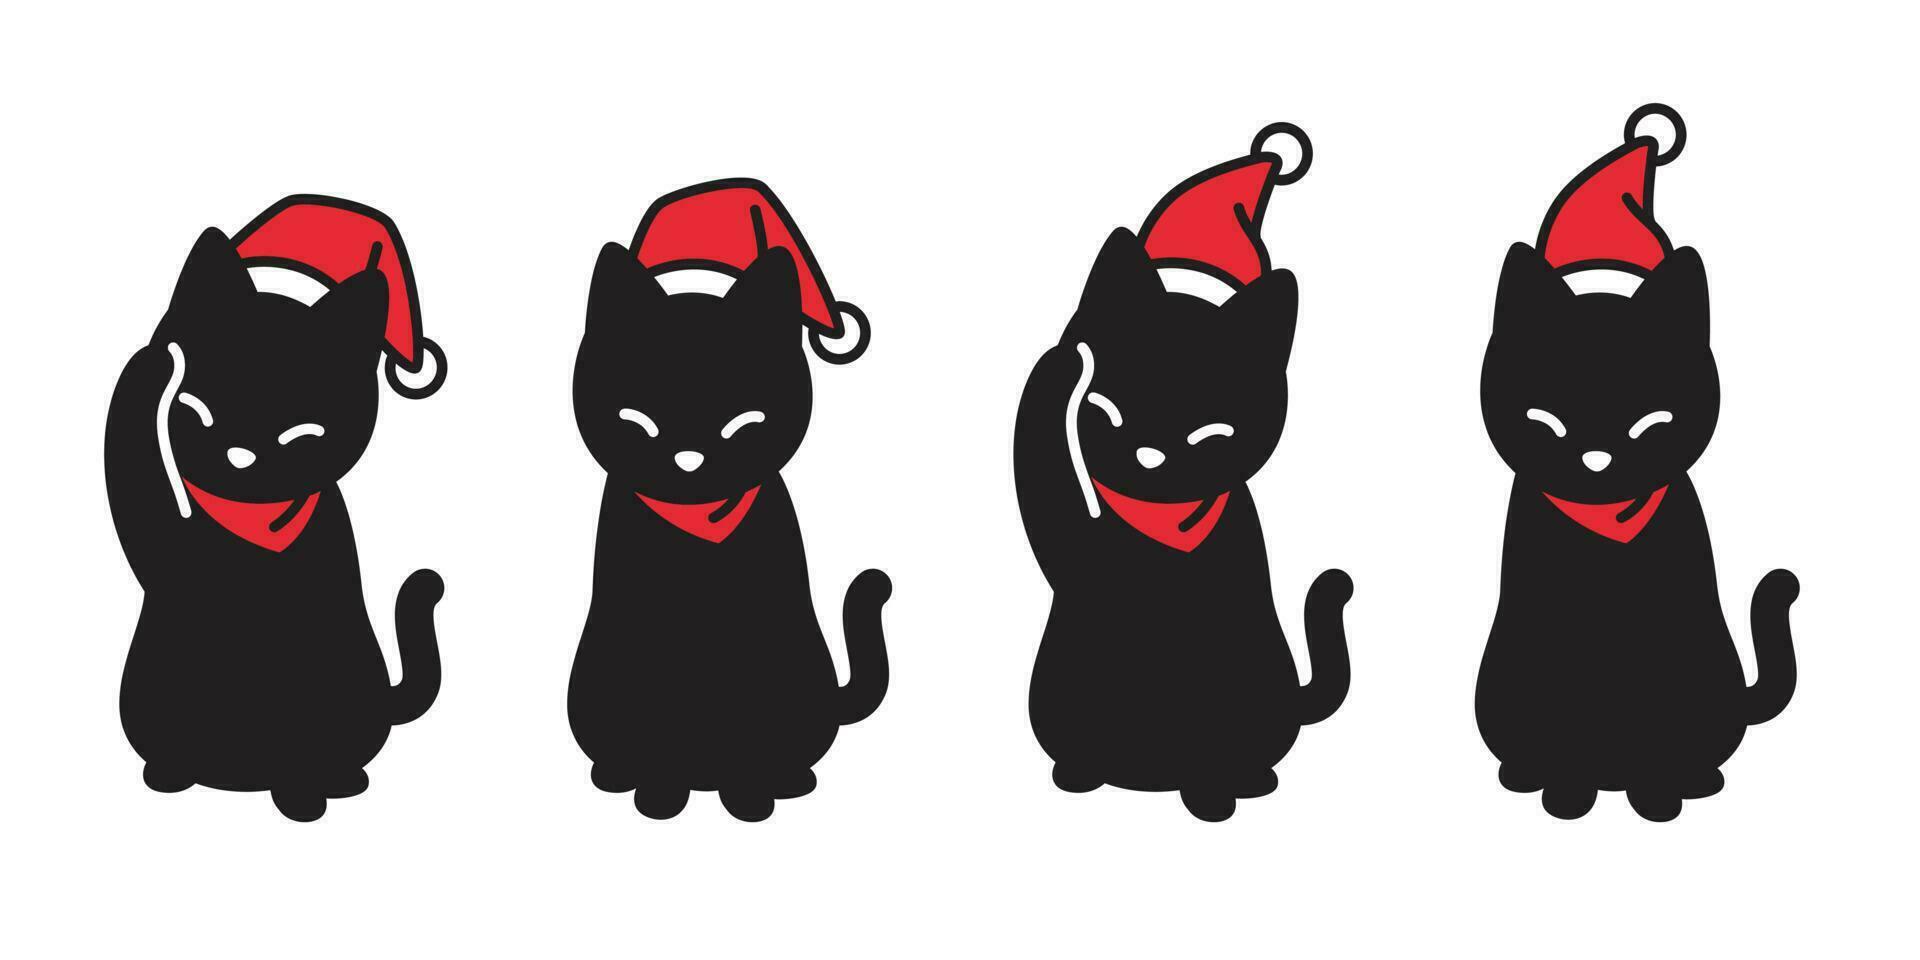 cat vector Christmas Santa claus hat Xmas icon kitten logo calico cartoon character illustration doodle black